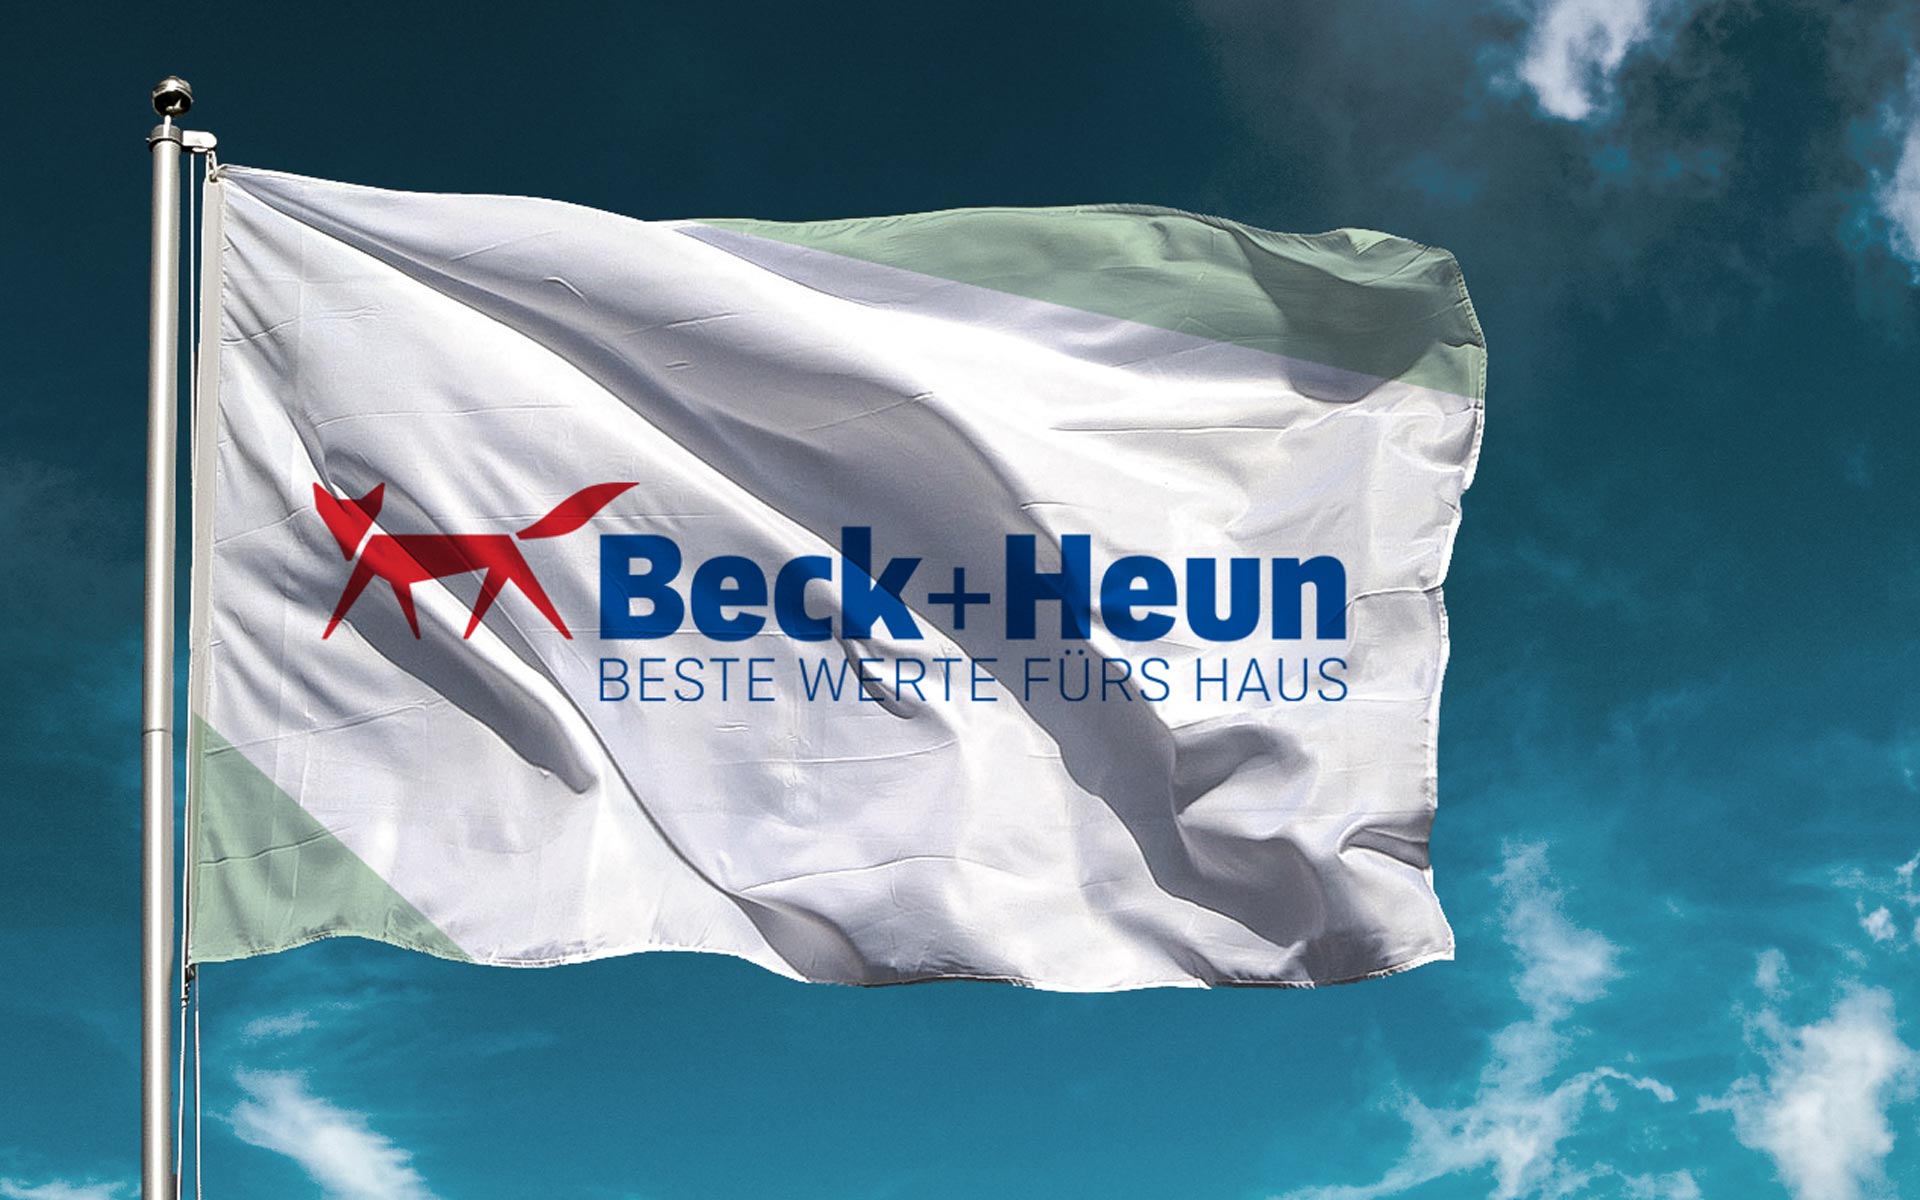 Beck+Heun Corporate Design, Markenkommunikation, Branding, Signage, Flagge